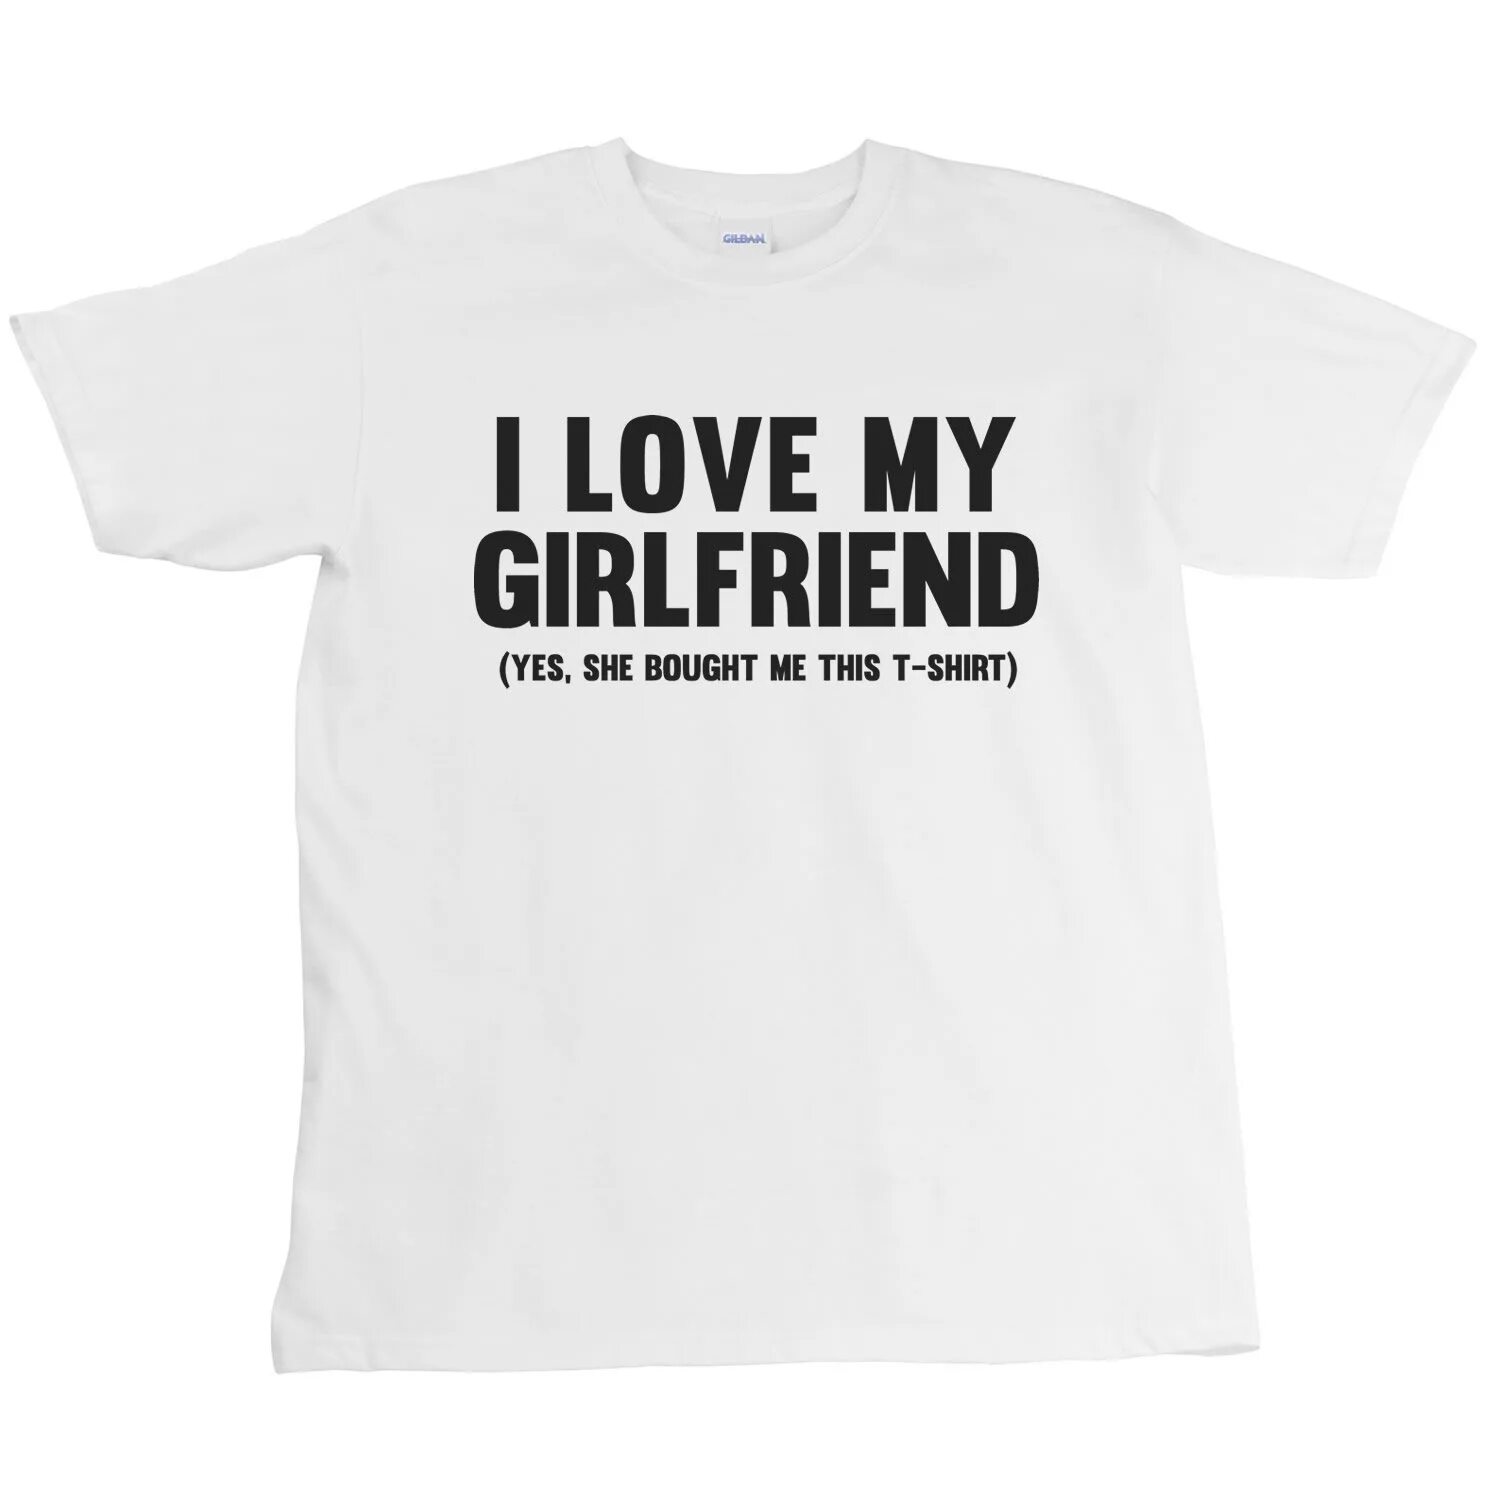 My girlfriend is awesome перевод. Футболка i Love my girlfriend. Принт на футболку i Love my girlfriend. I Love my gf футболка. Футболка i like my girlfriend.